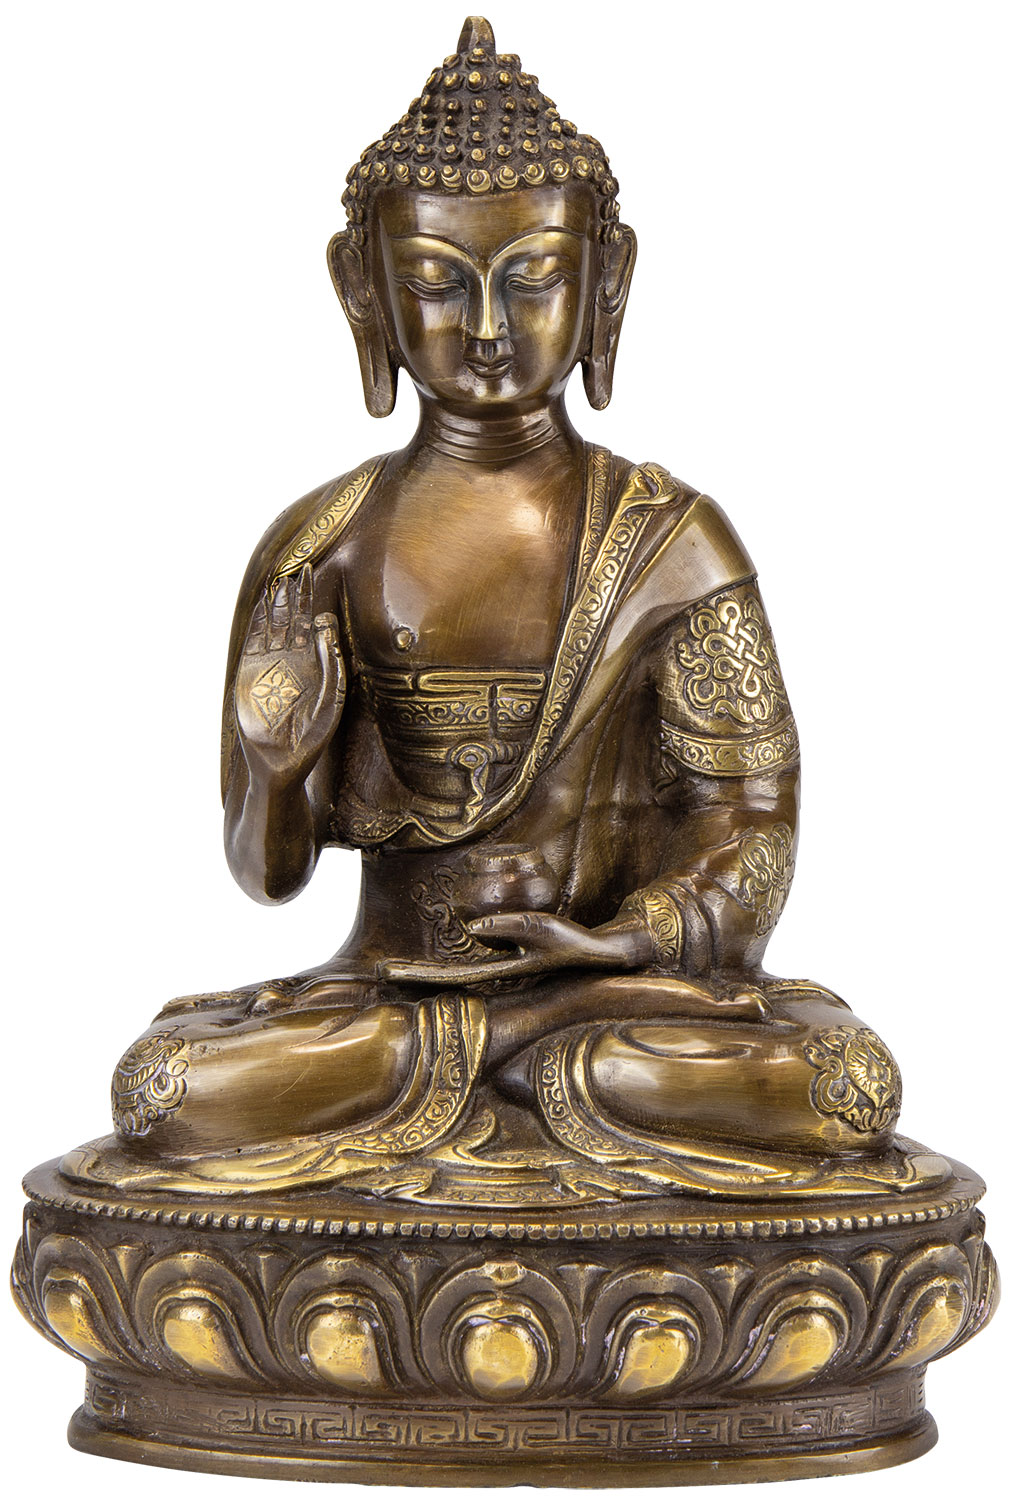 Brass sculpture "Kanakamuni Buddha - the Gold-Wise"